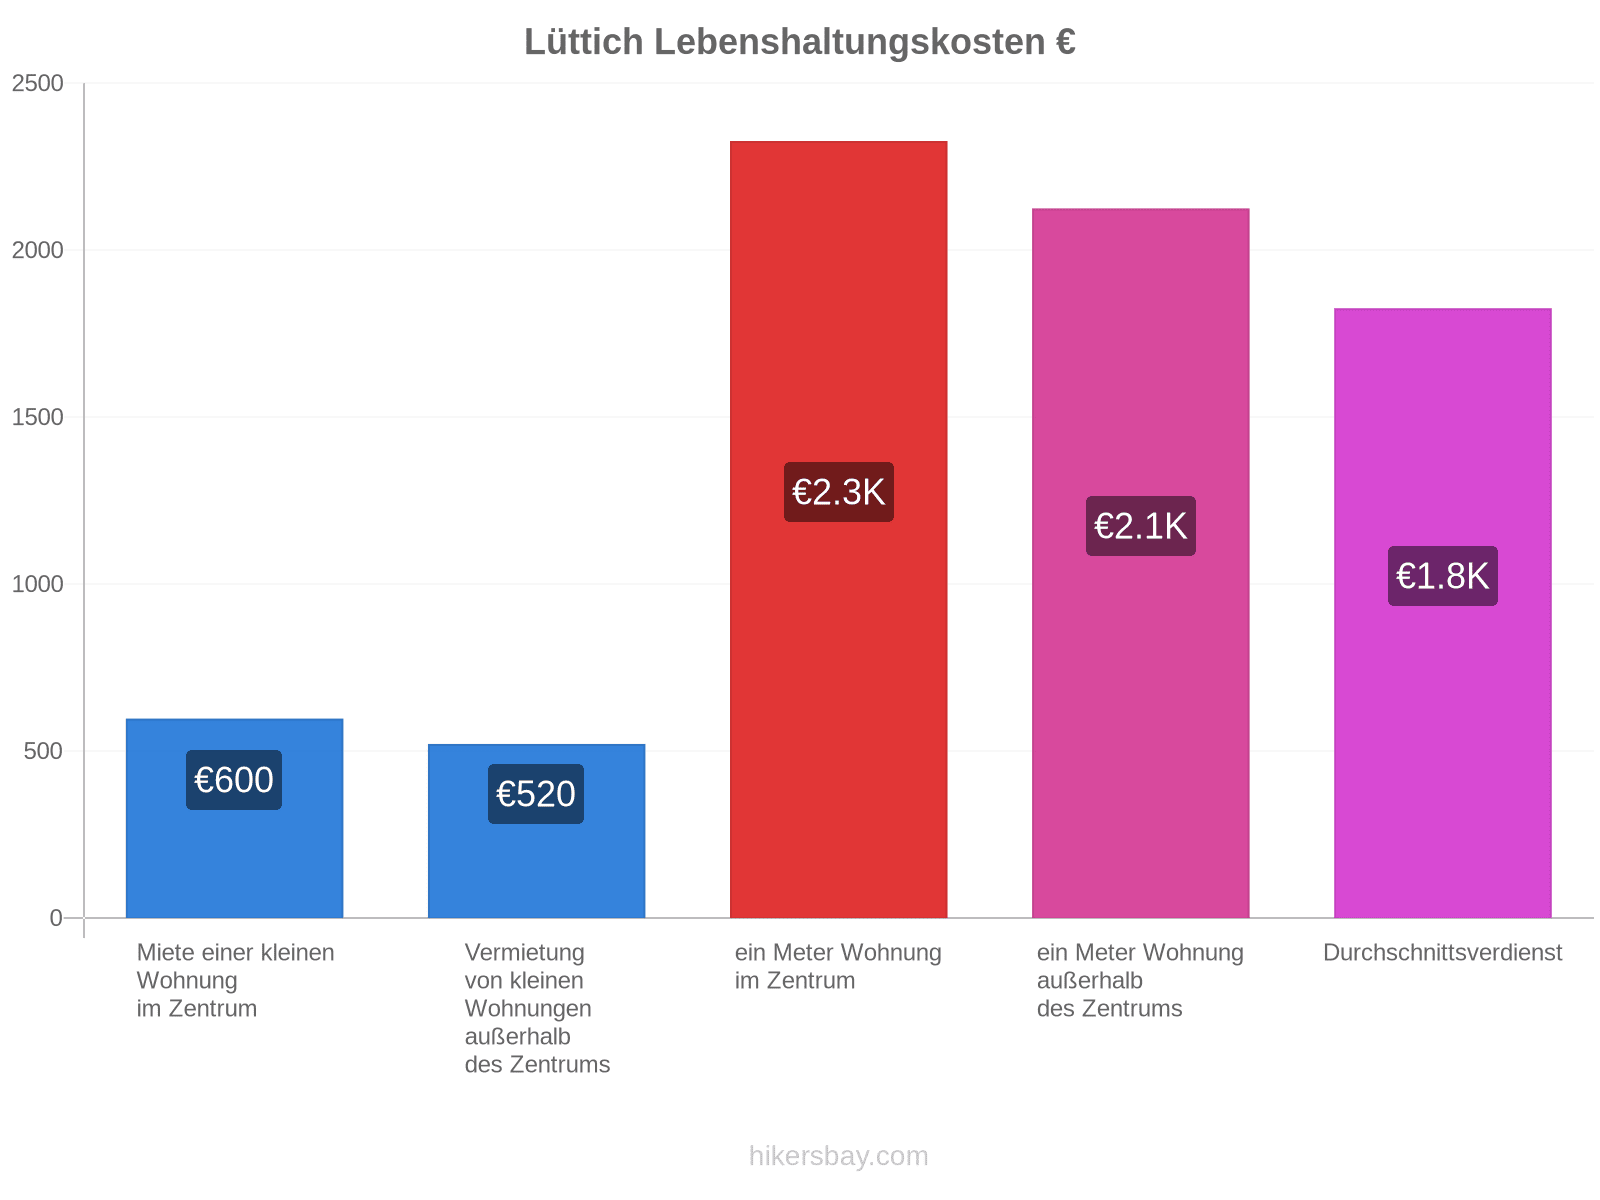 Lüttich Lebenshaltungskosten hikersbay.com